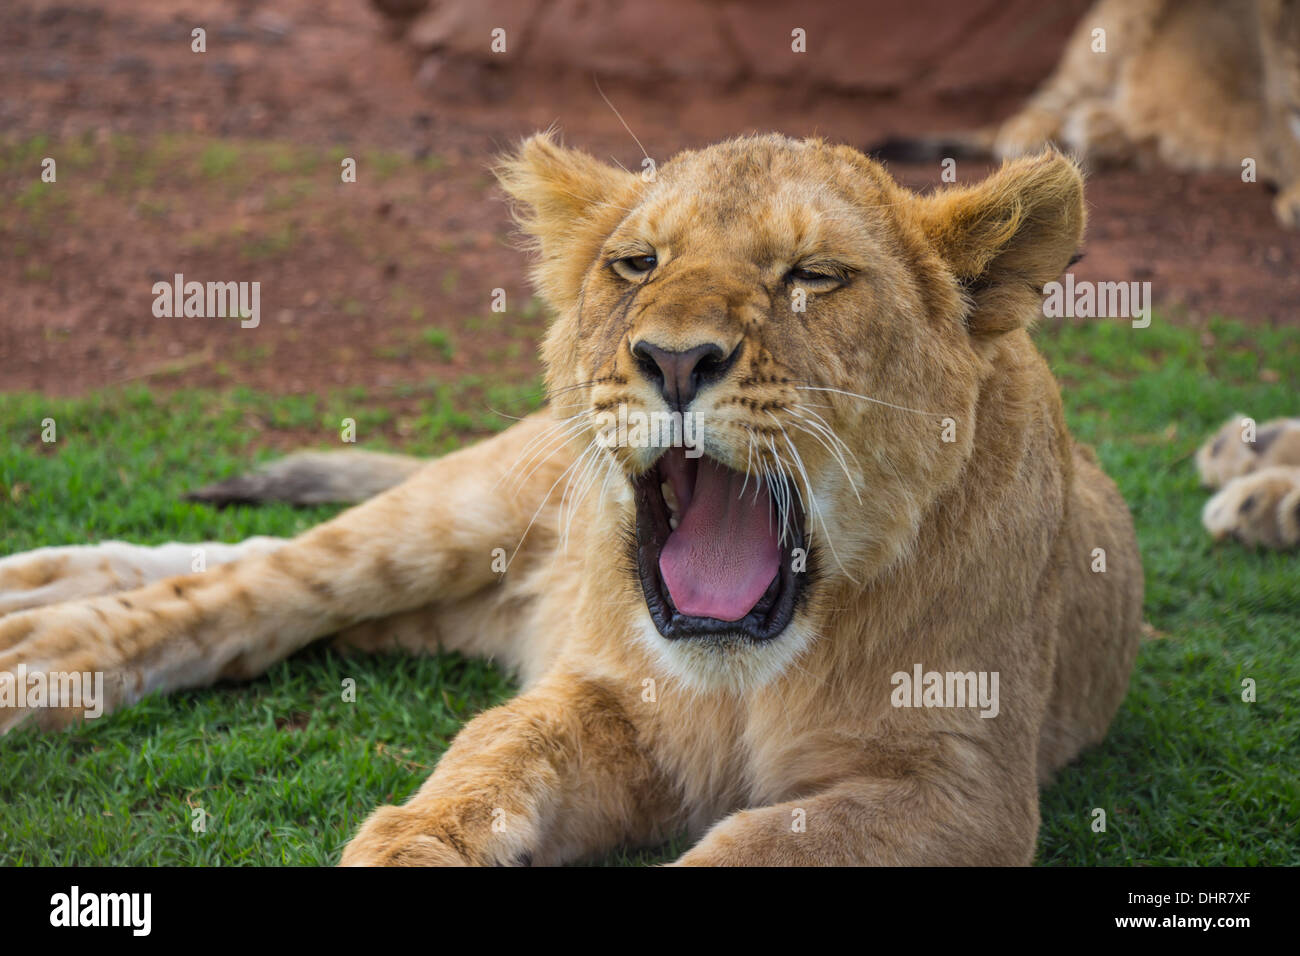 Yawning Lion Cub With Eyes Half Closed Stock Photo